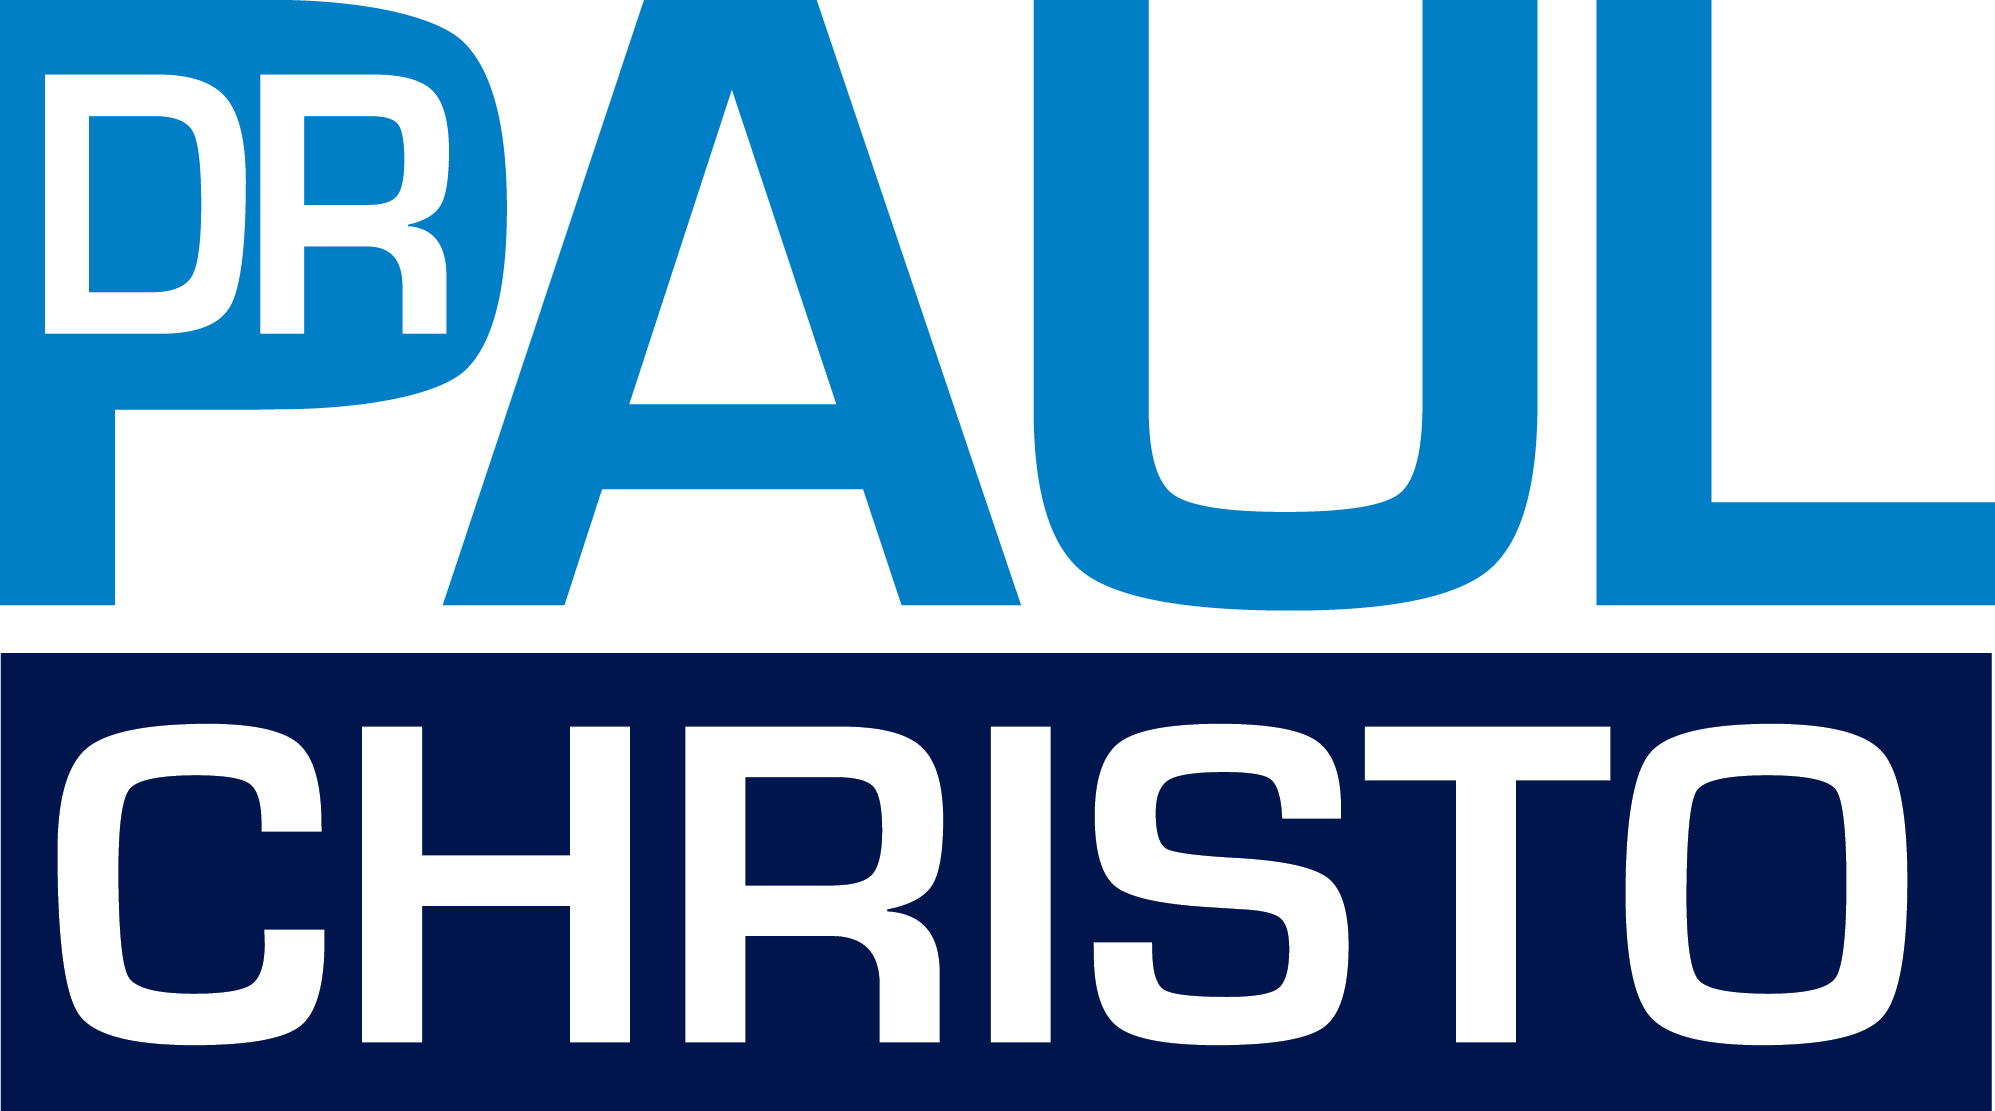 Paul Christo MD